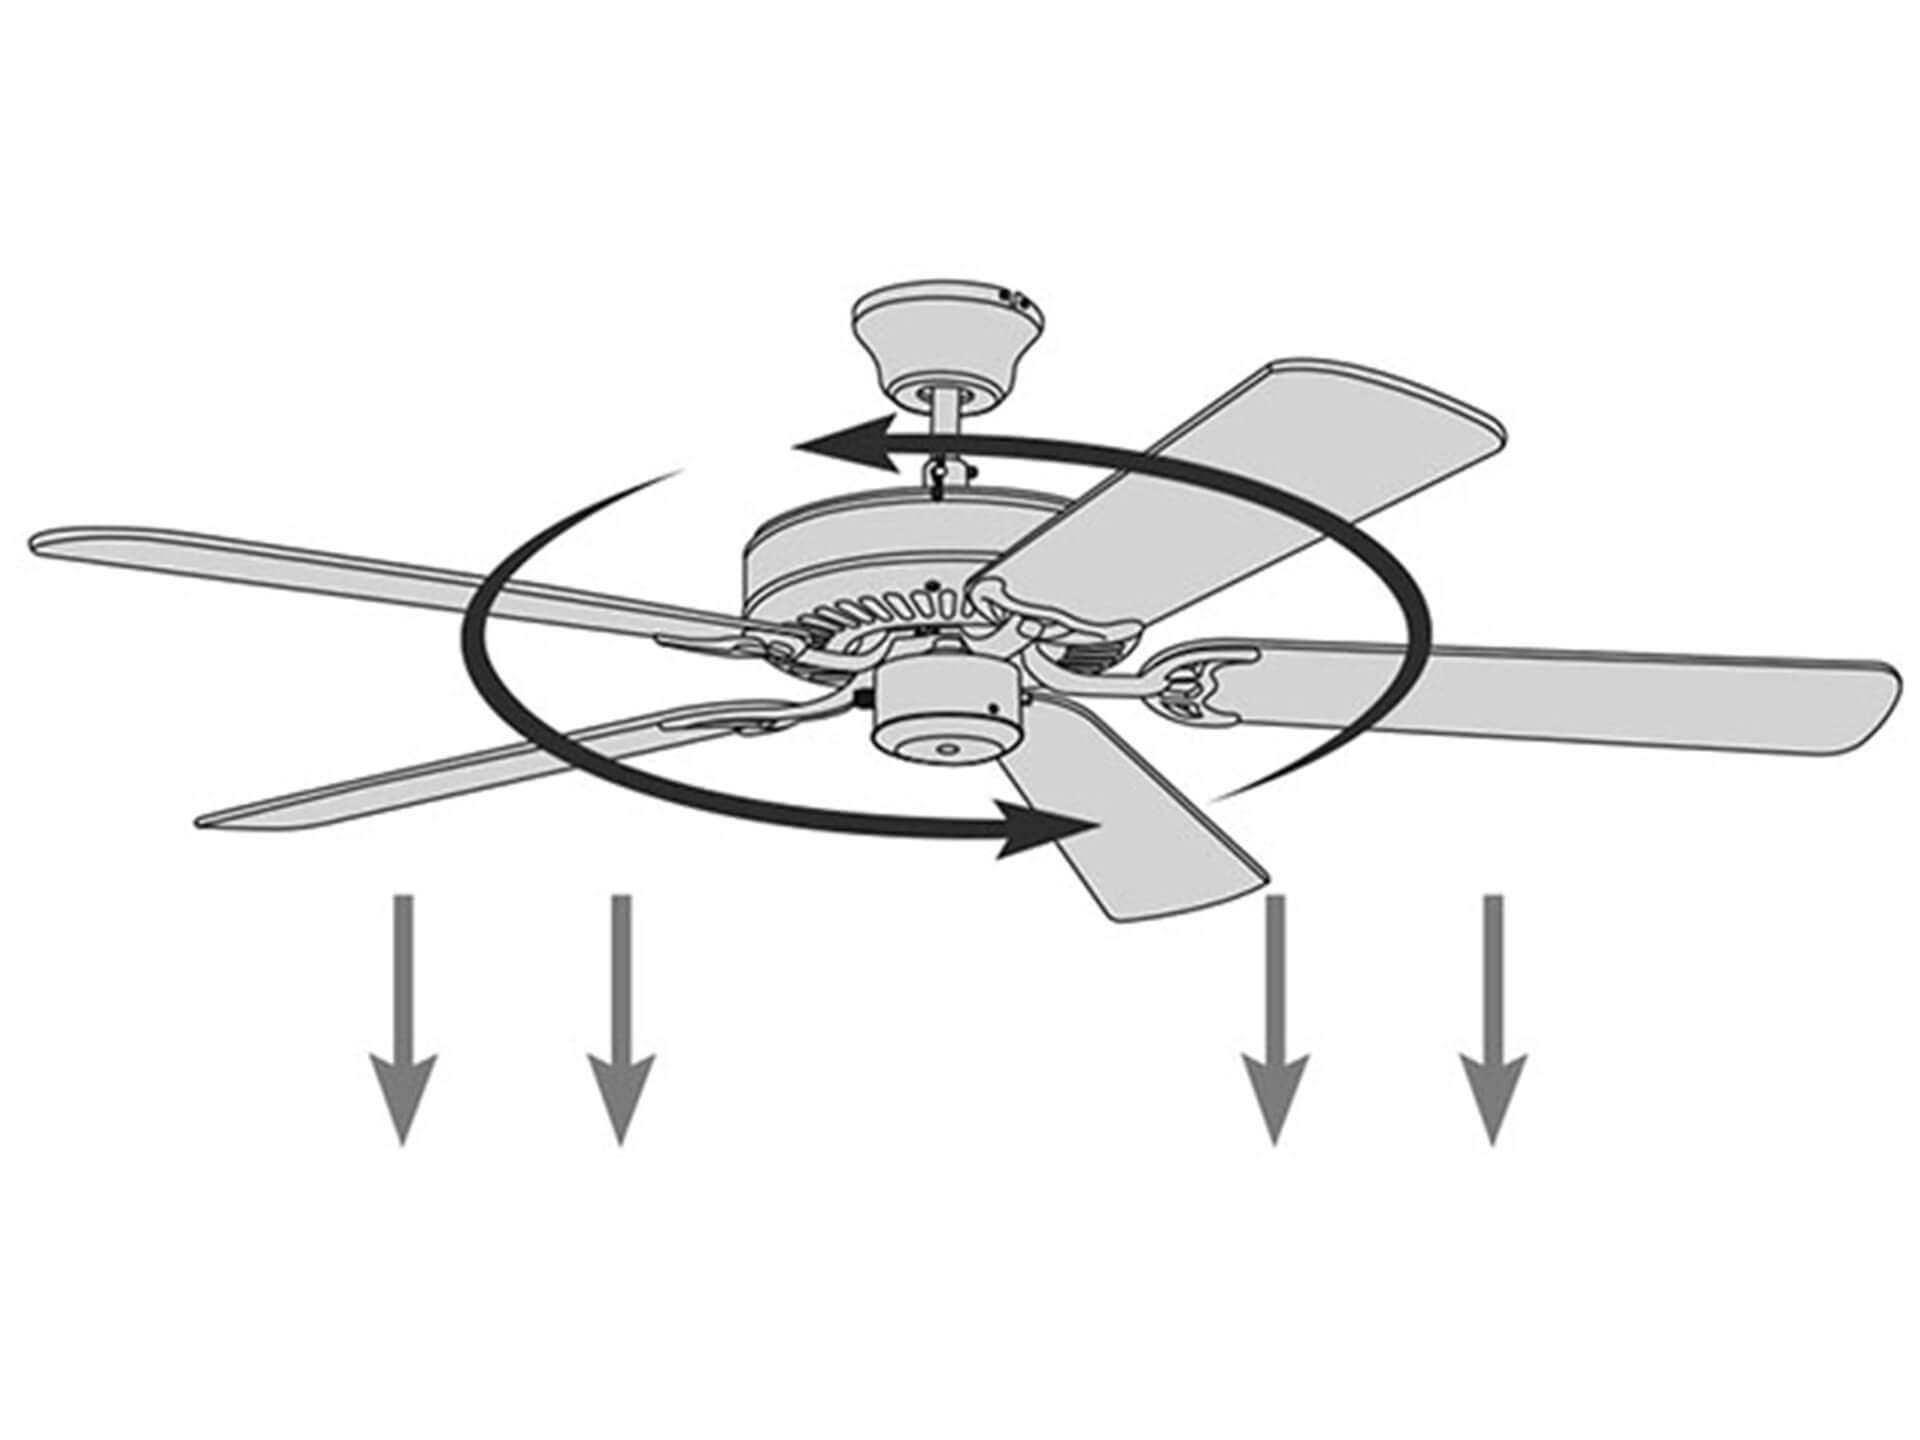 Fan illustration demonstrating air pushing down